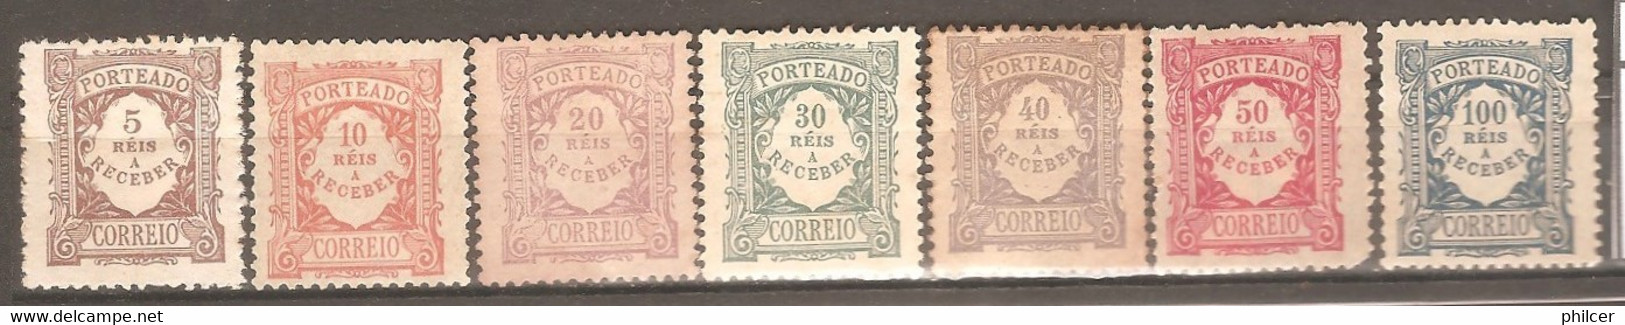 Portugal, 1904, # 7/13, Porteado, MNG - Unused Stamps